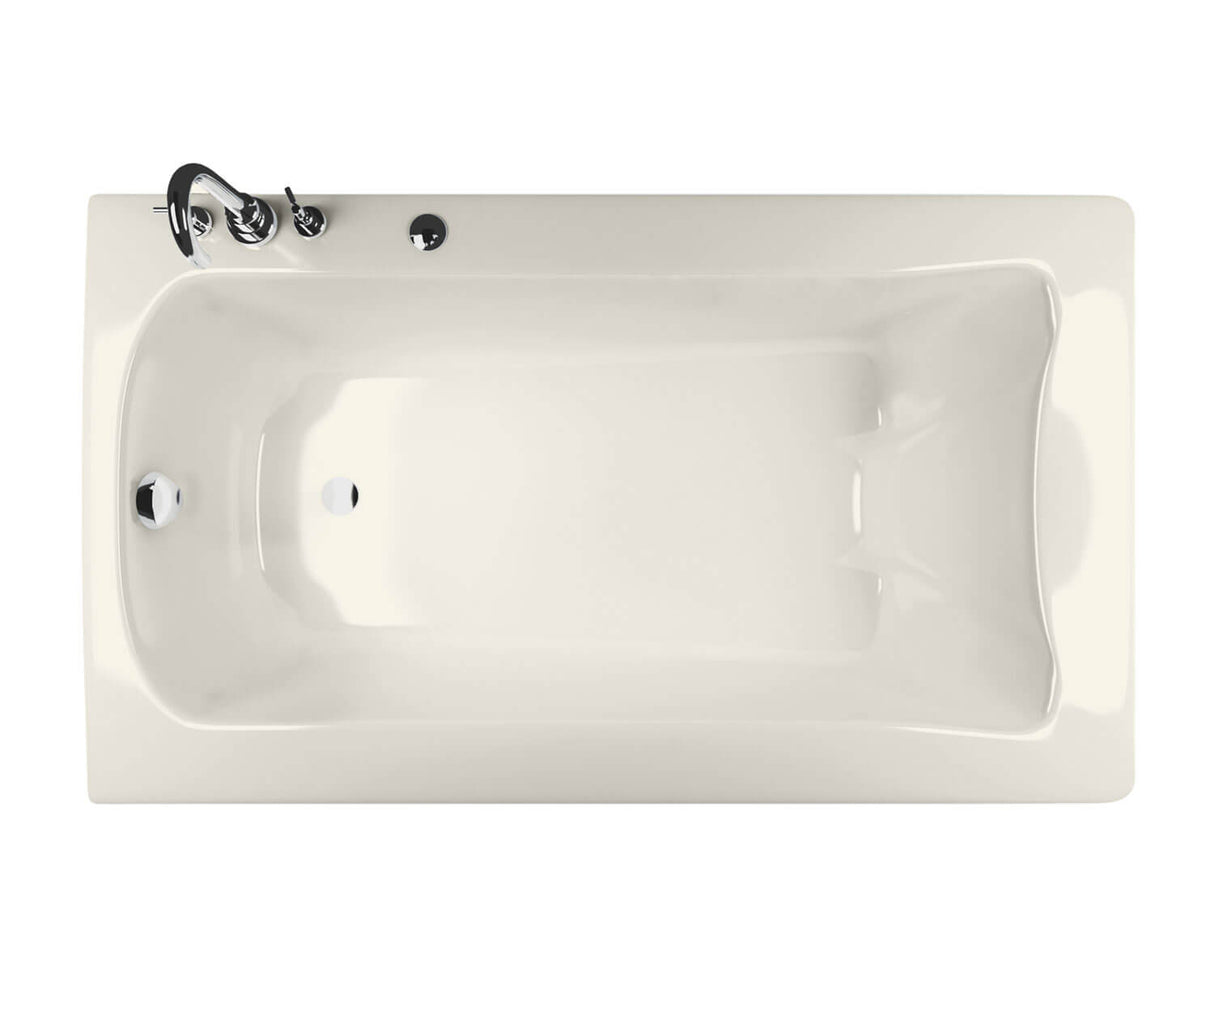 MAAX 105311-L-094-007 Release 6036 Acrylic Drop-in Left-Hand Drain Combined Hydromax & Aerofeel Bathtub in Biscuit